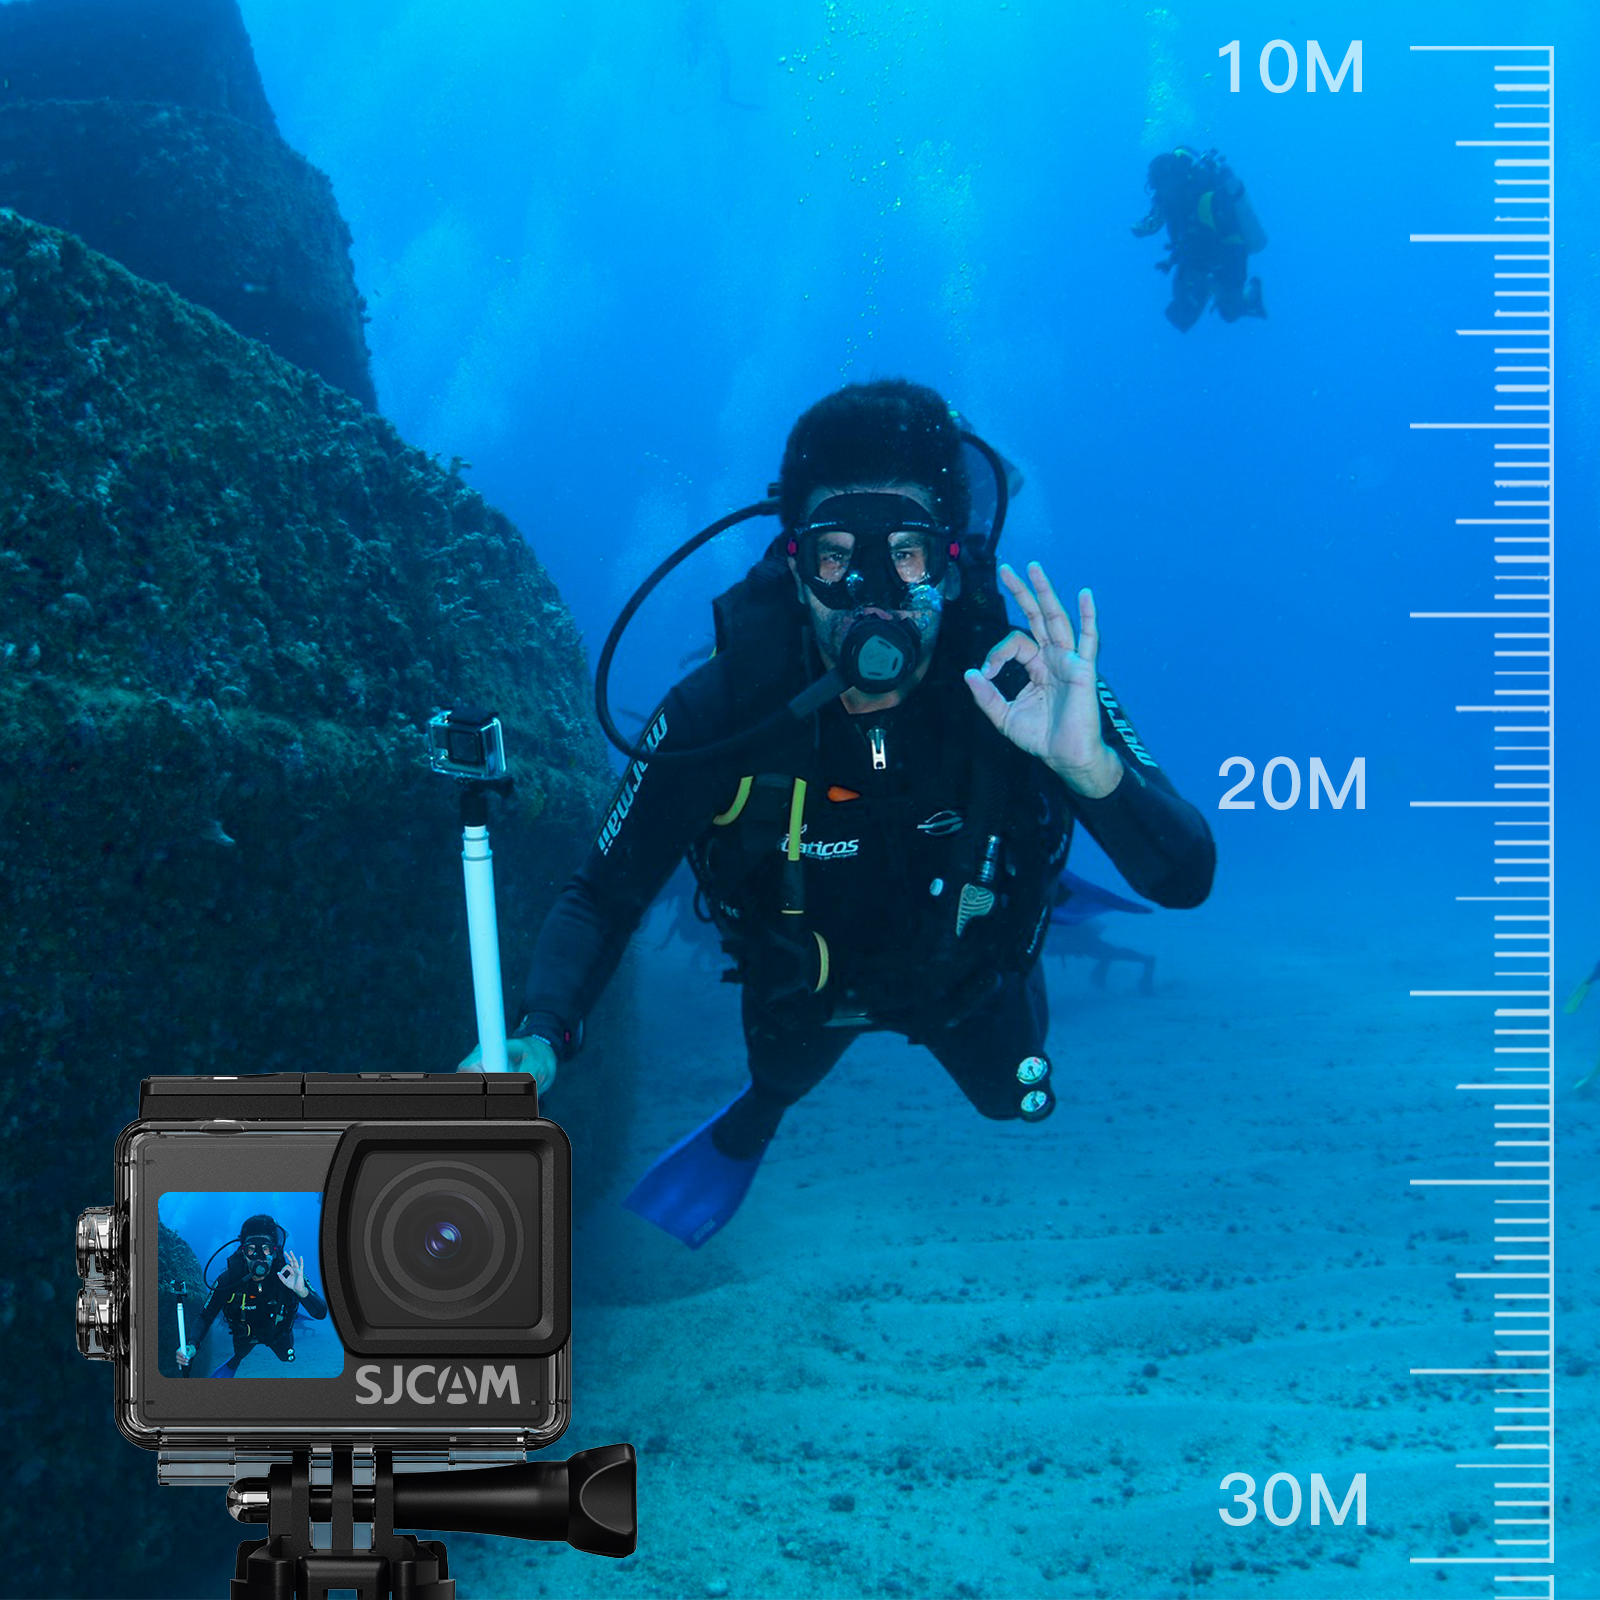 SJCAM Action Camera Dual-Screen SJ4000 AIR 4K 30PFS 1080P 4x Zoom WIFI Waterproof Cam Sports Video Action Cameras